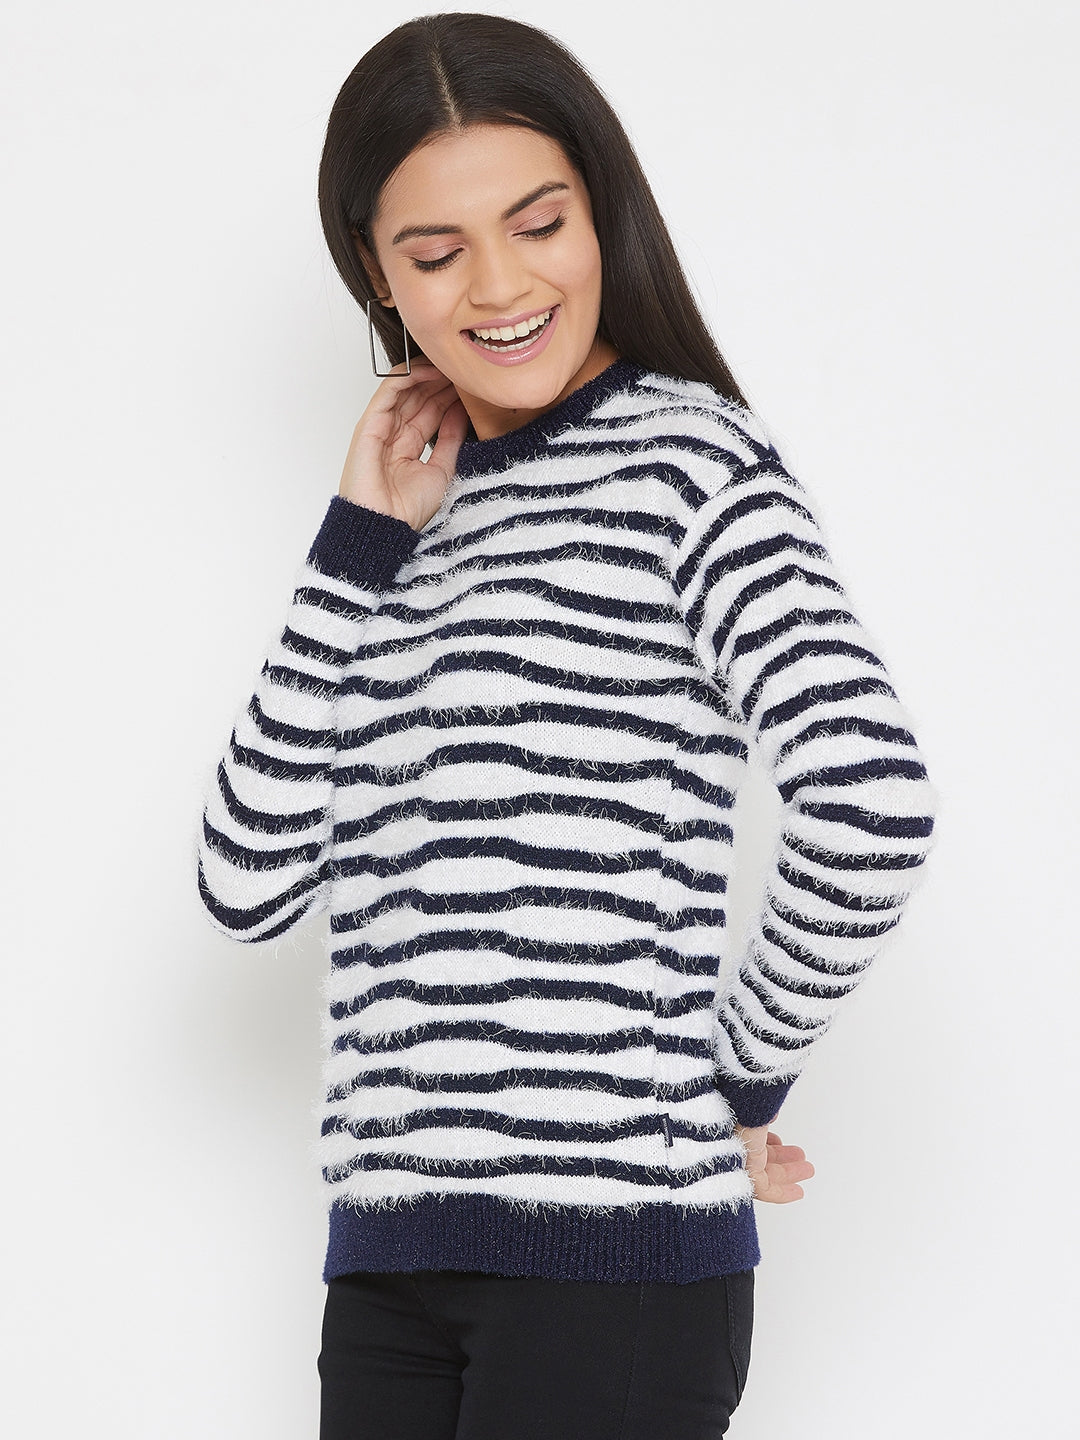 White Striped Round Neck Sweater - Women Sweaters